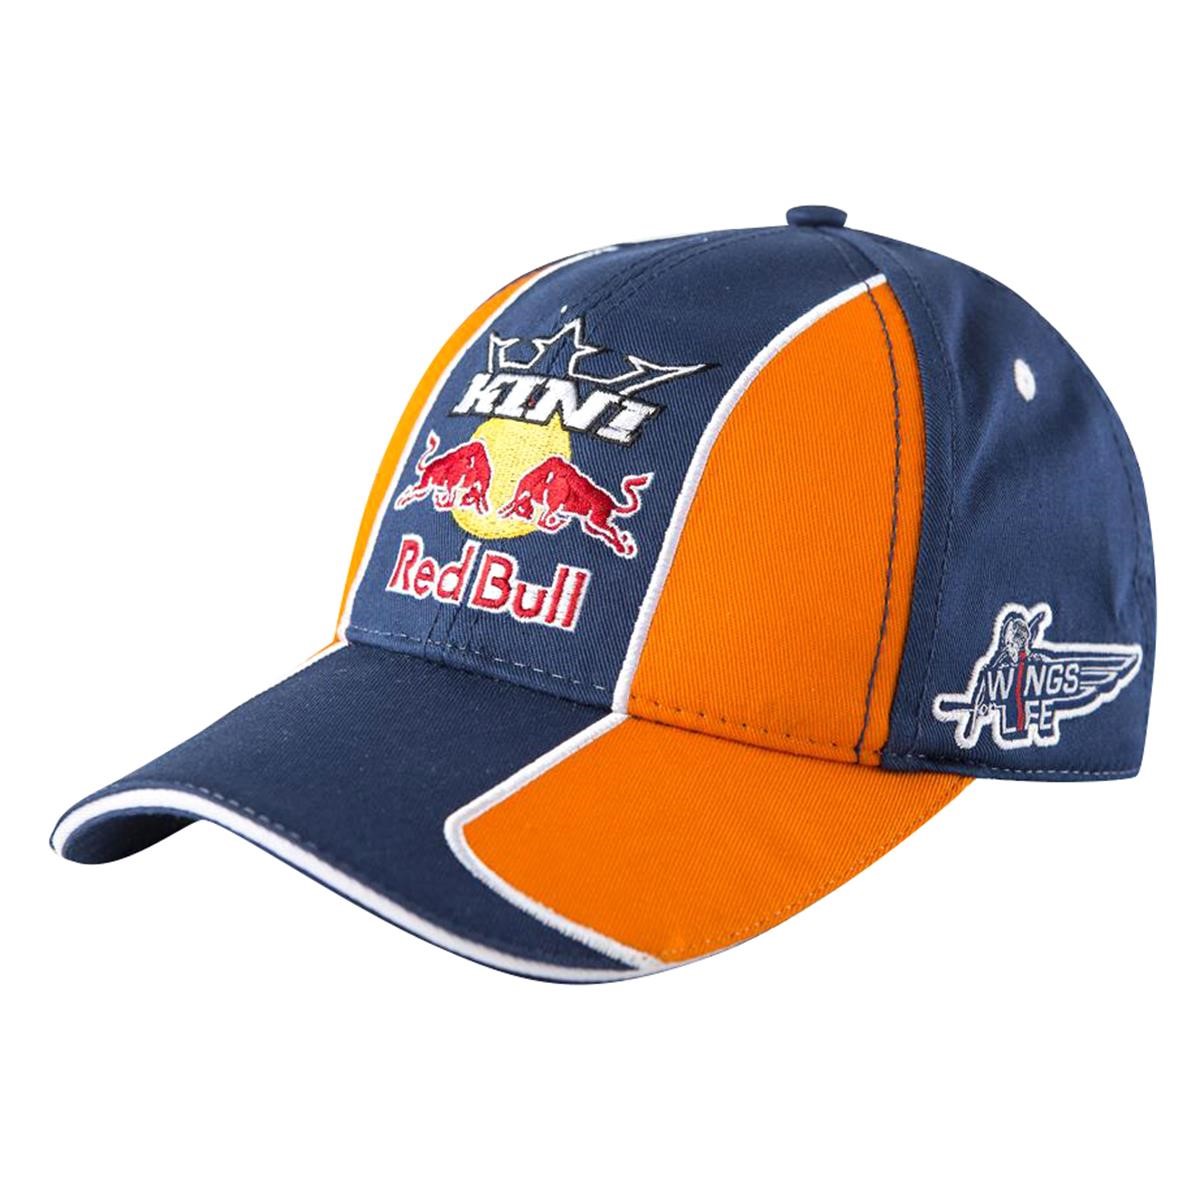 Kini Red Bull Team Orange/Navy